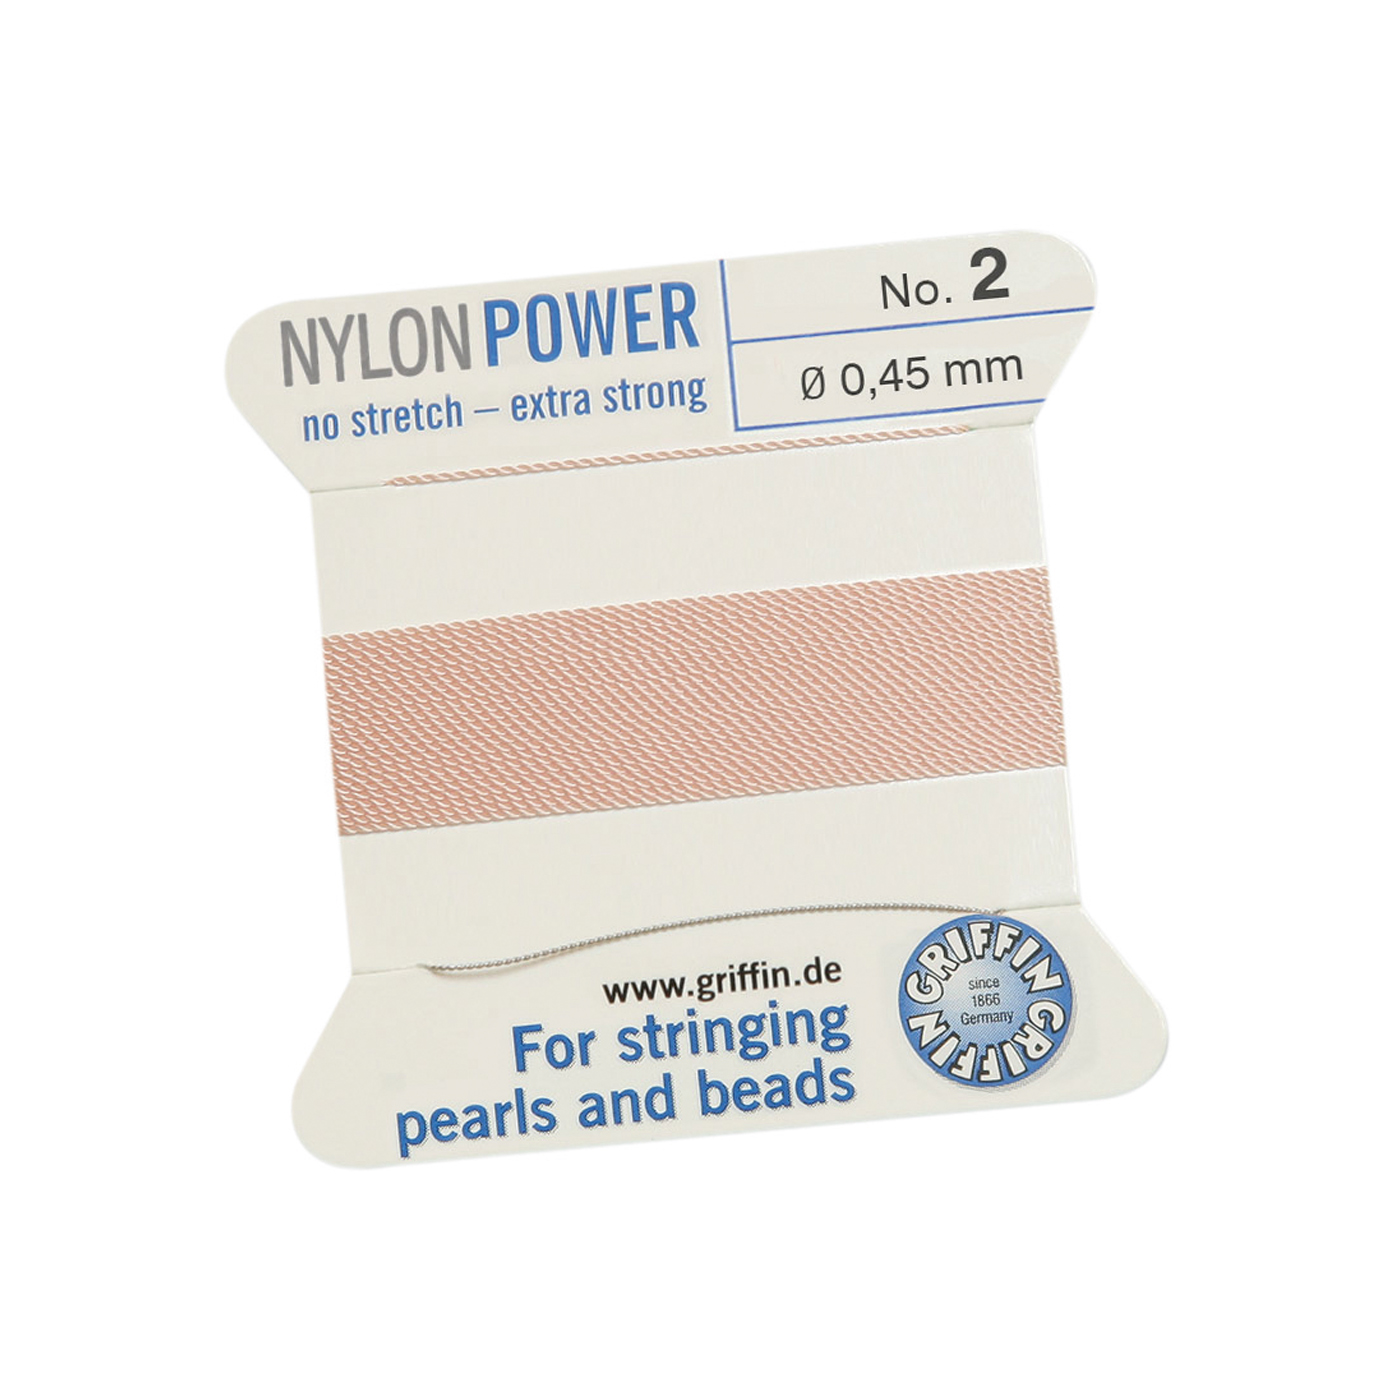 Bead Cord NylonPower, Light Pink, No. 2 - 2 m